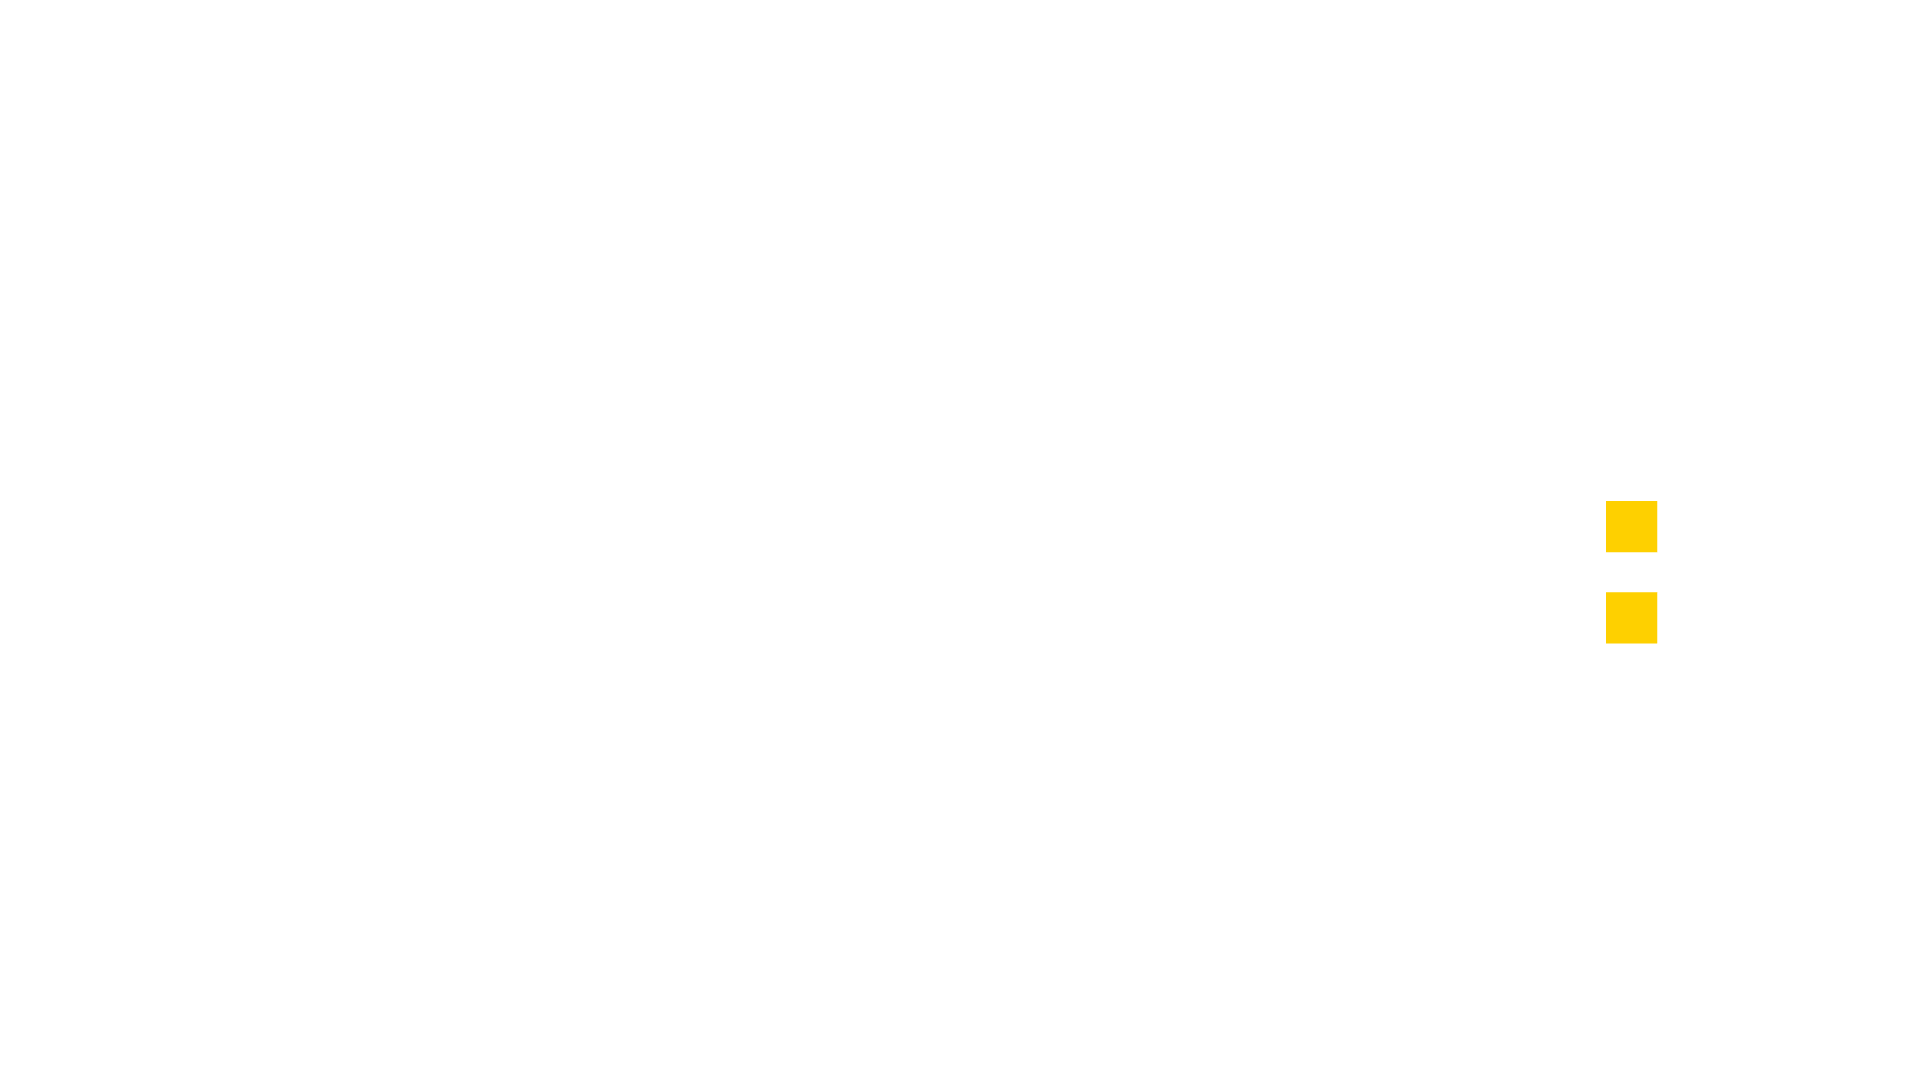 variodev, sviluppatore di siti web, web app e software desktop.